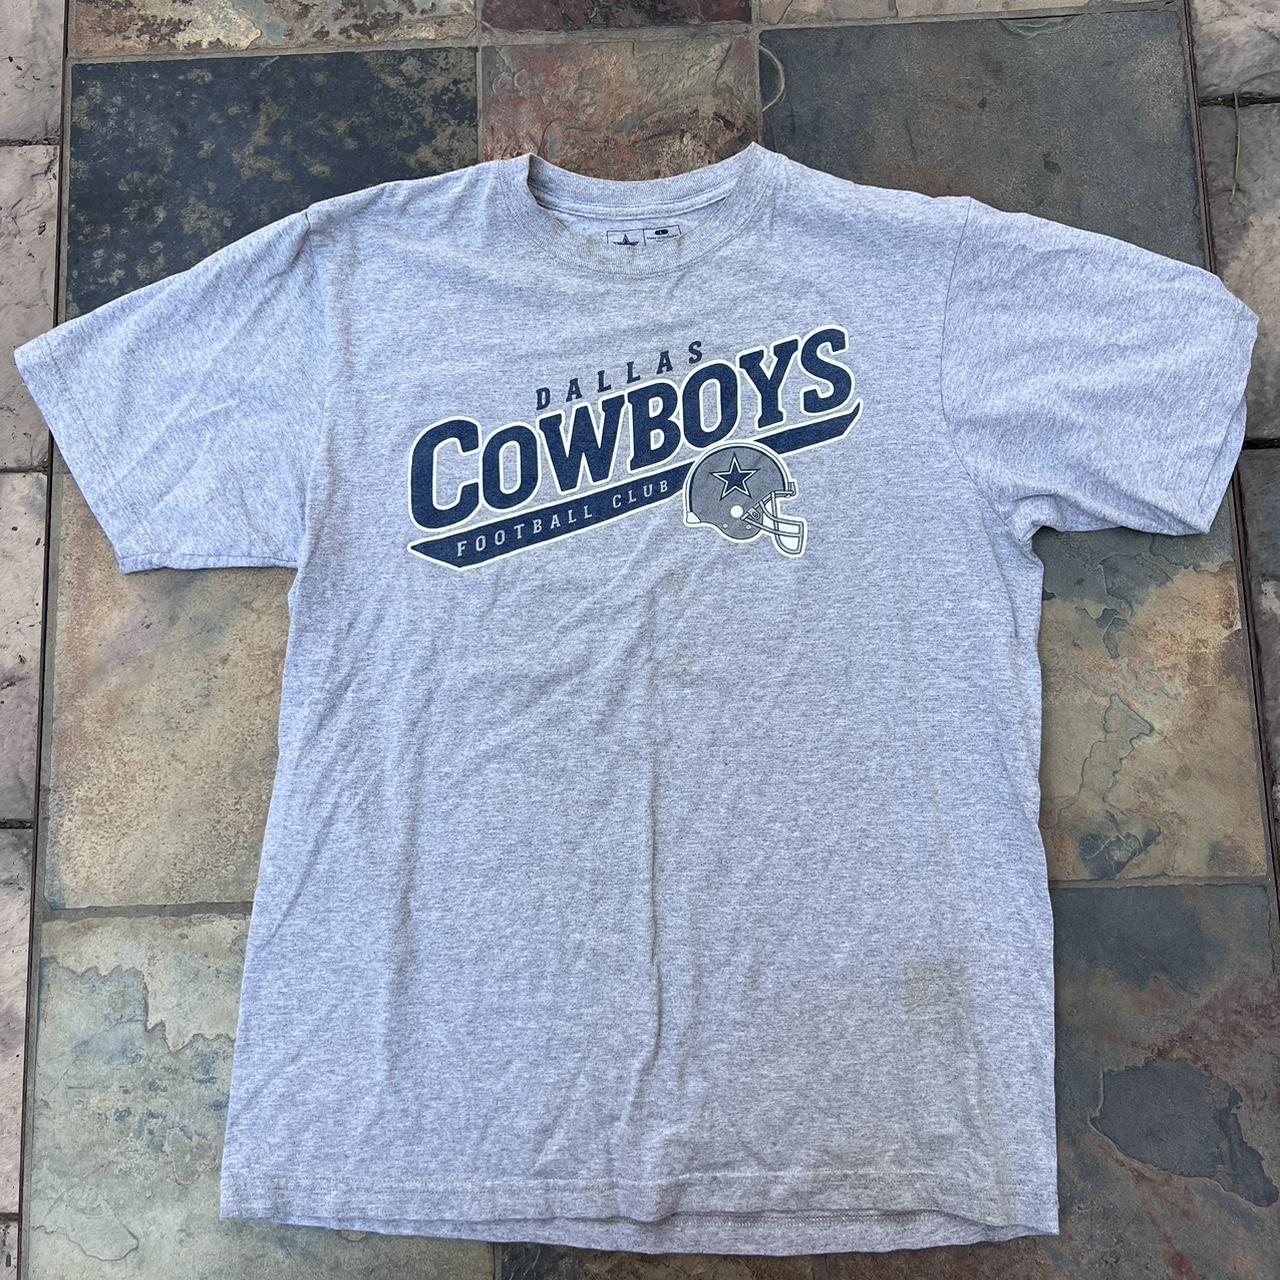 Dallas Cowboys Football Club Shirt Size Large Good - Depop